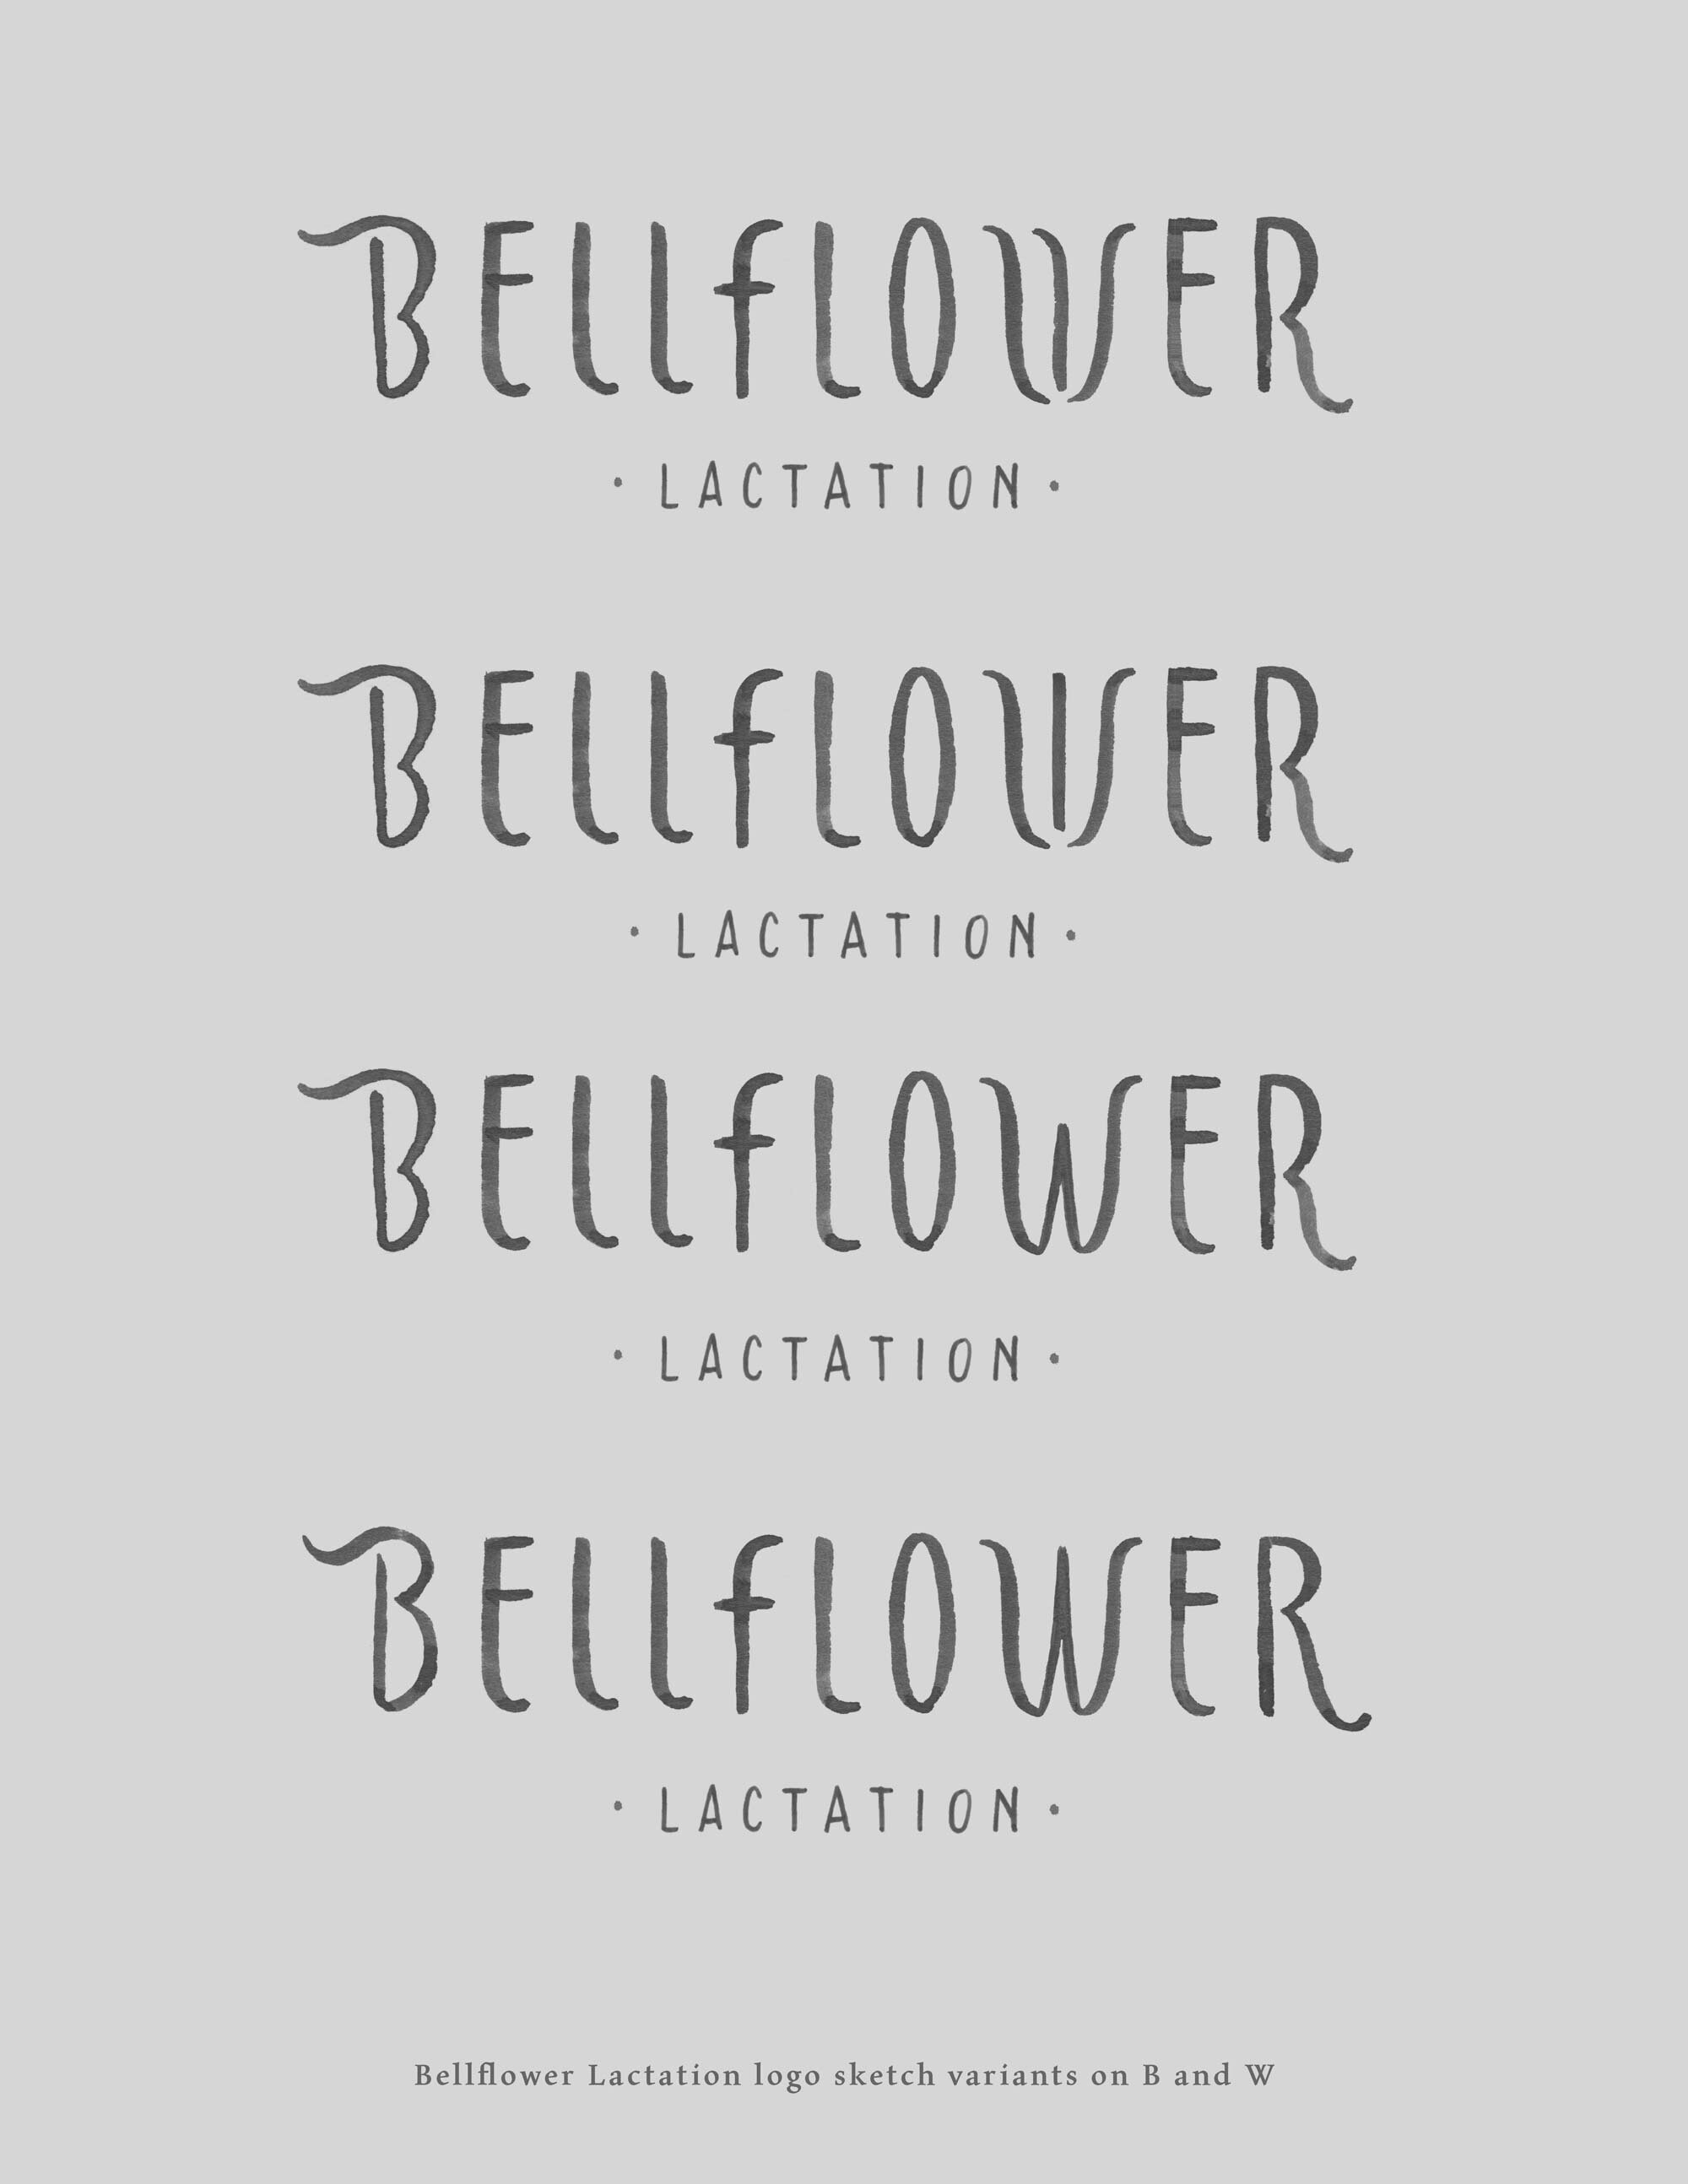 erinellis_bellflower-logo-sketches1.jpg